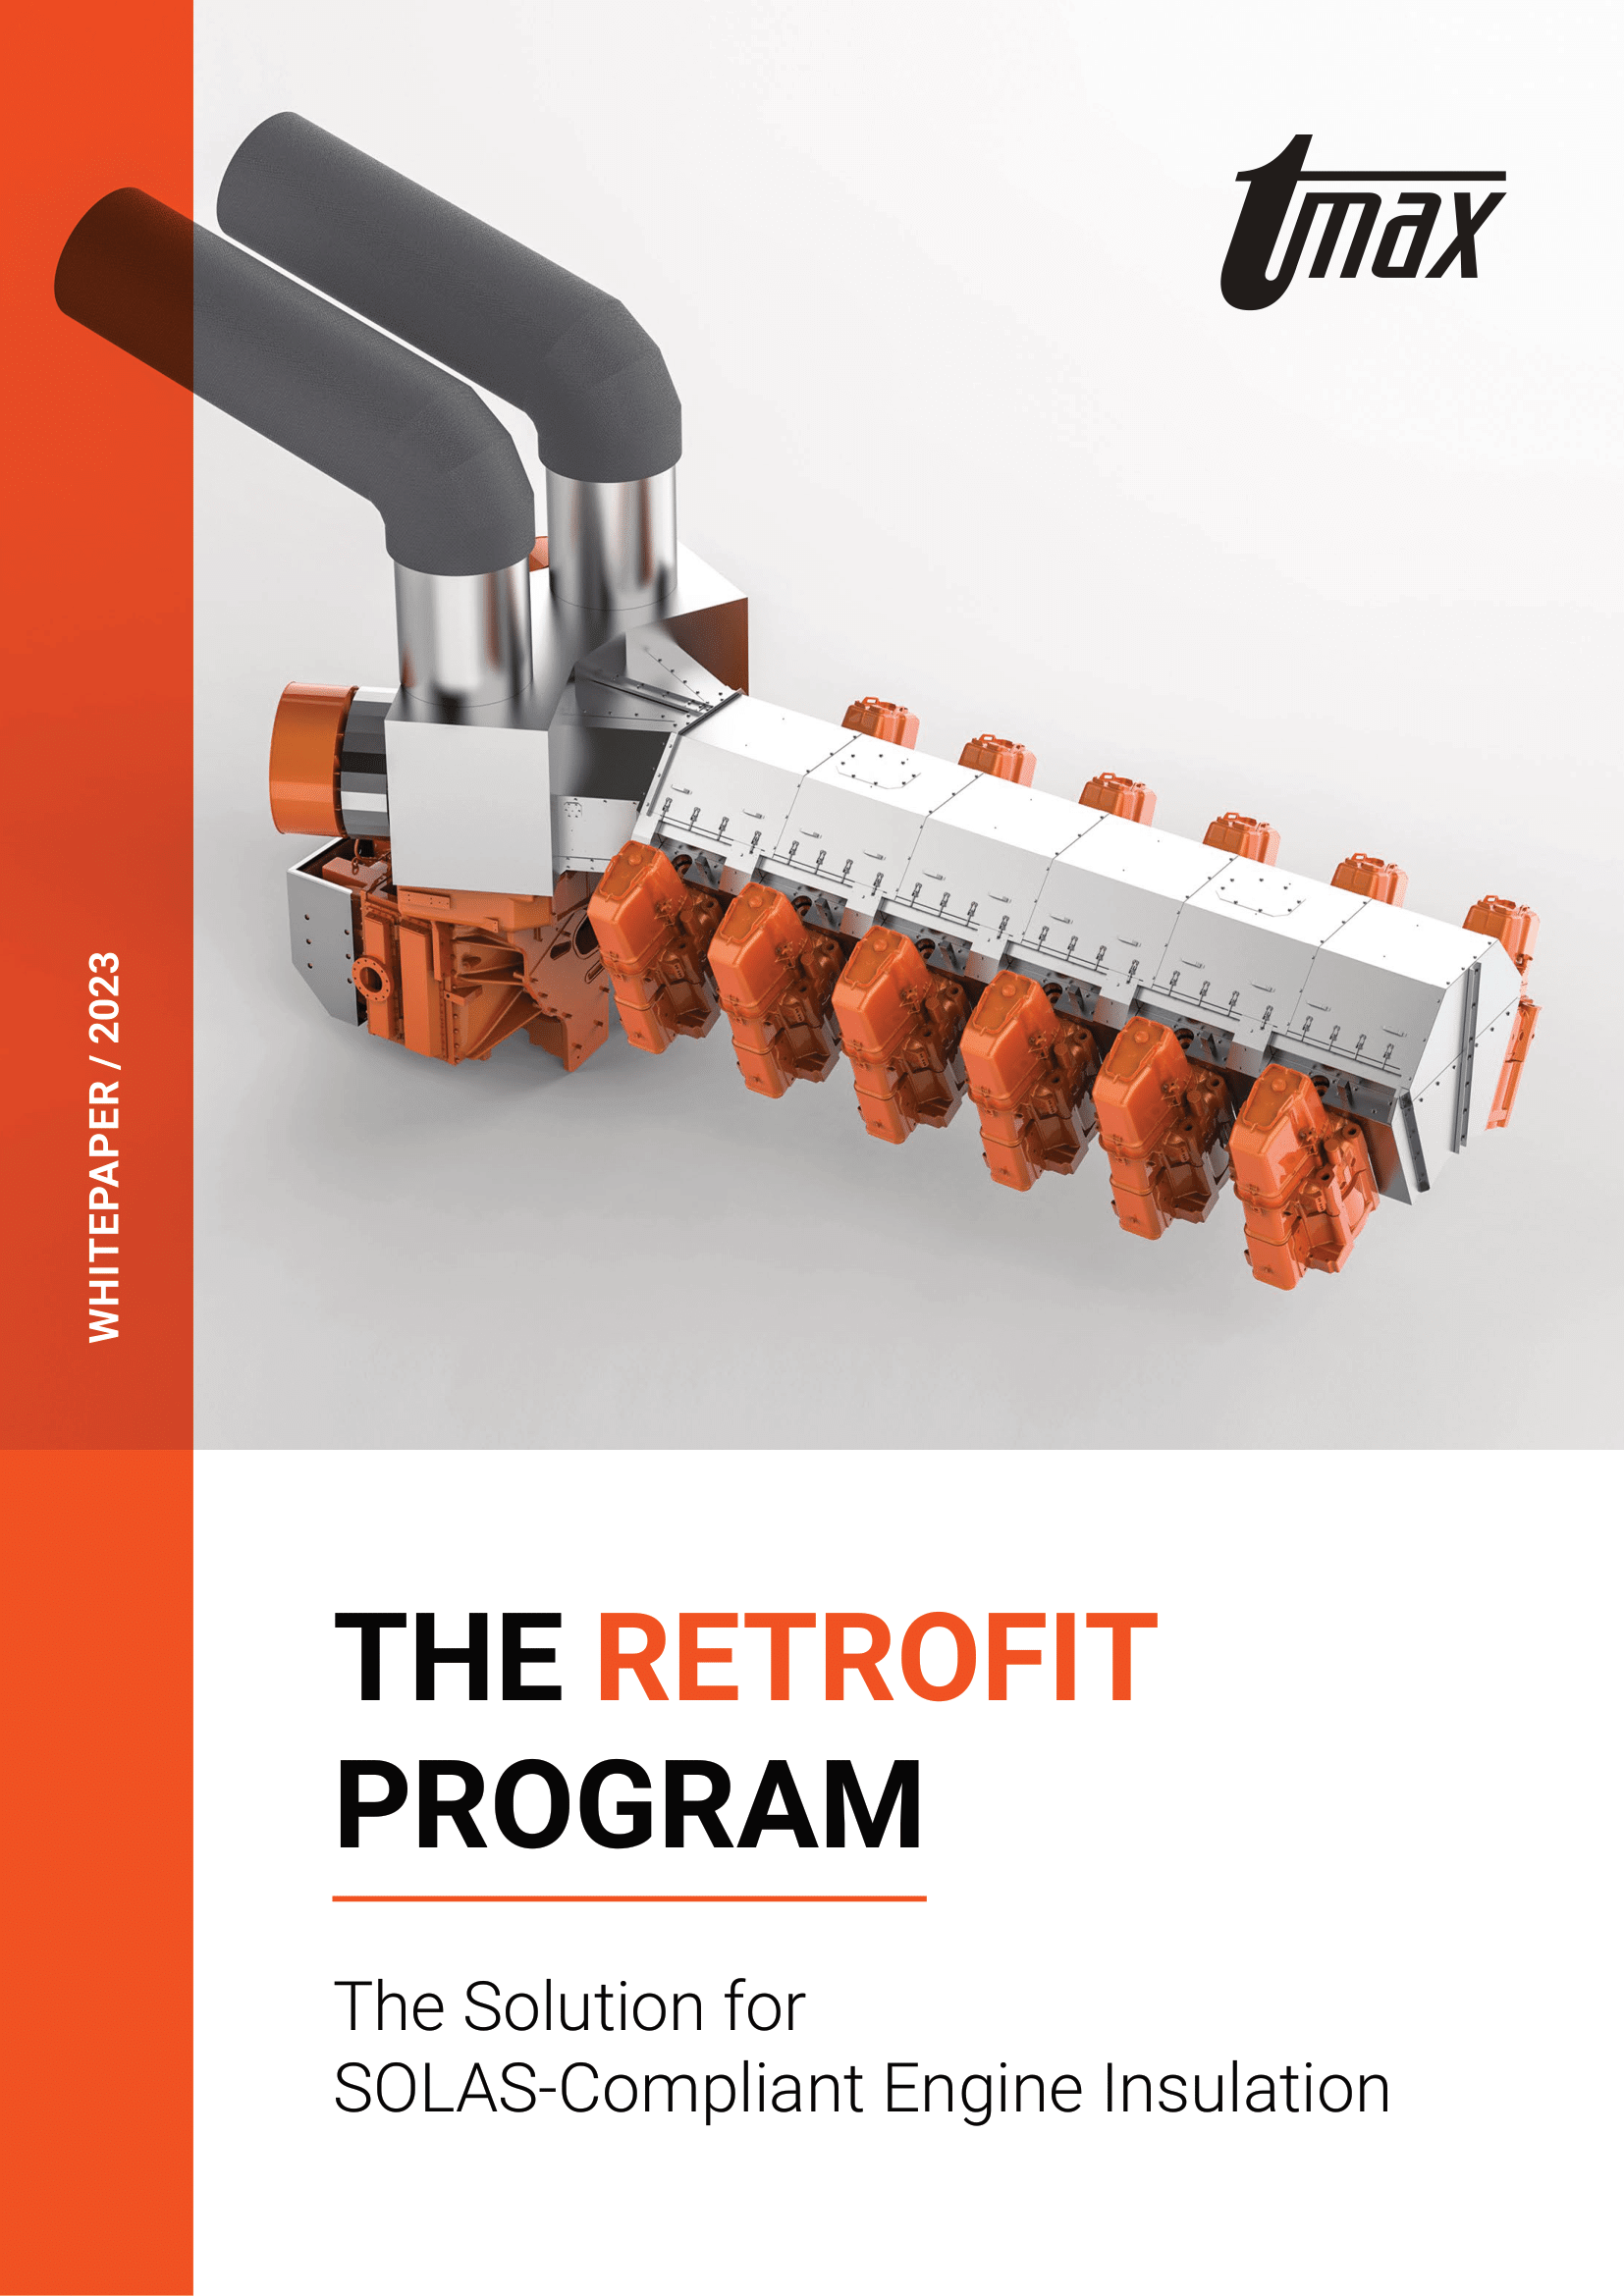 The tmax RETROFIT Program